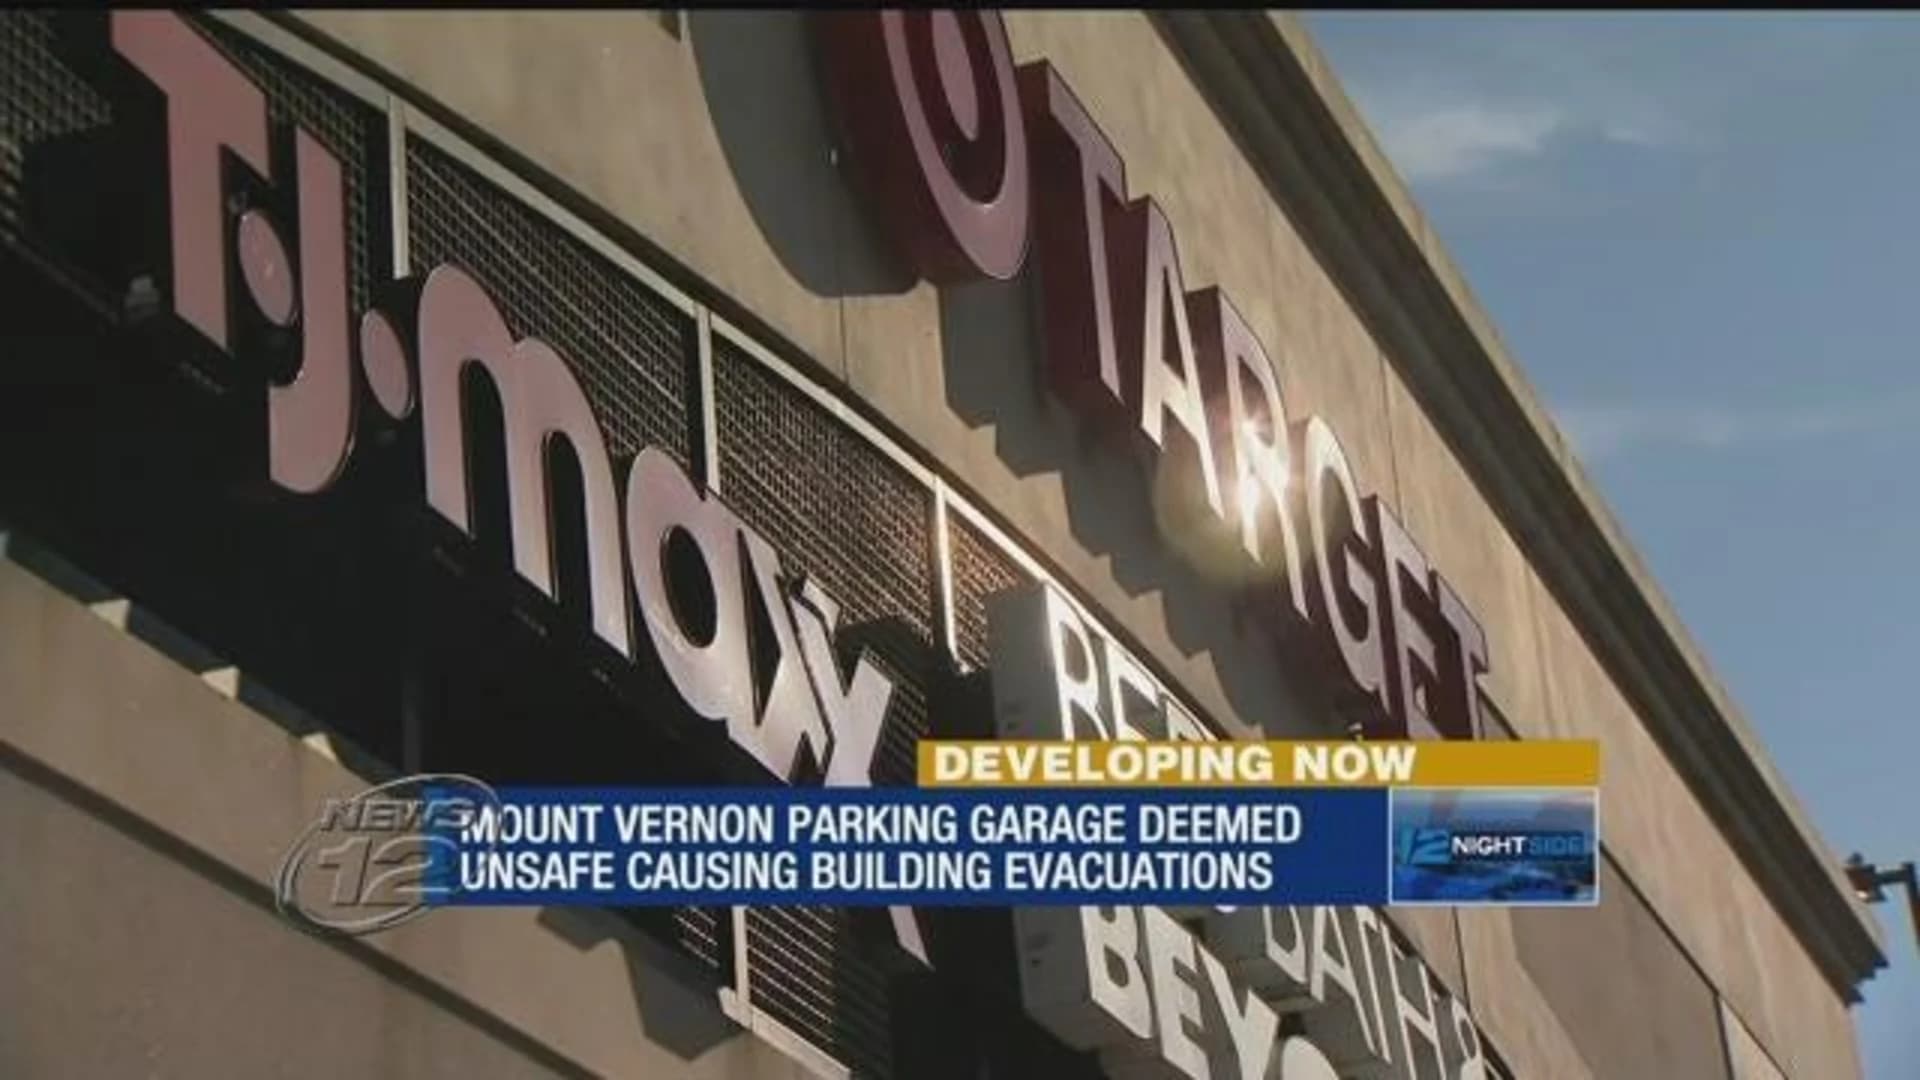 Mount Vernon parking garage deemed unsafe